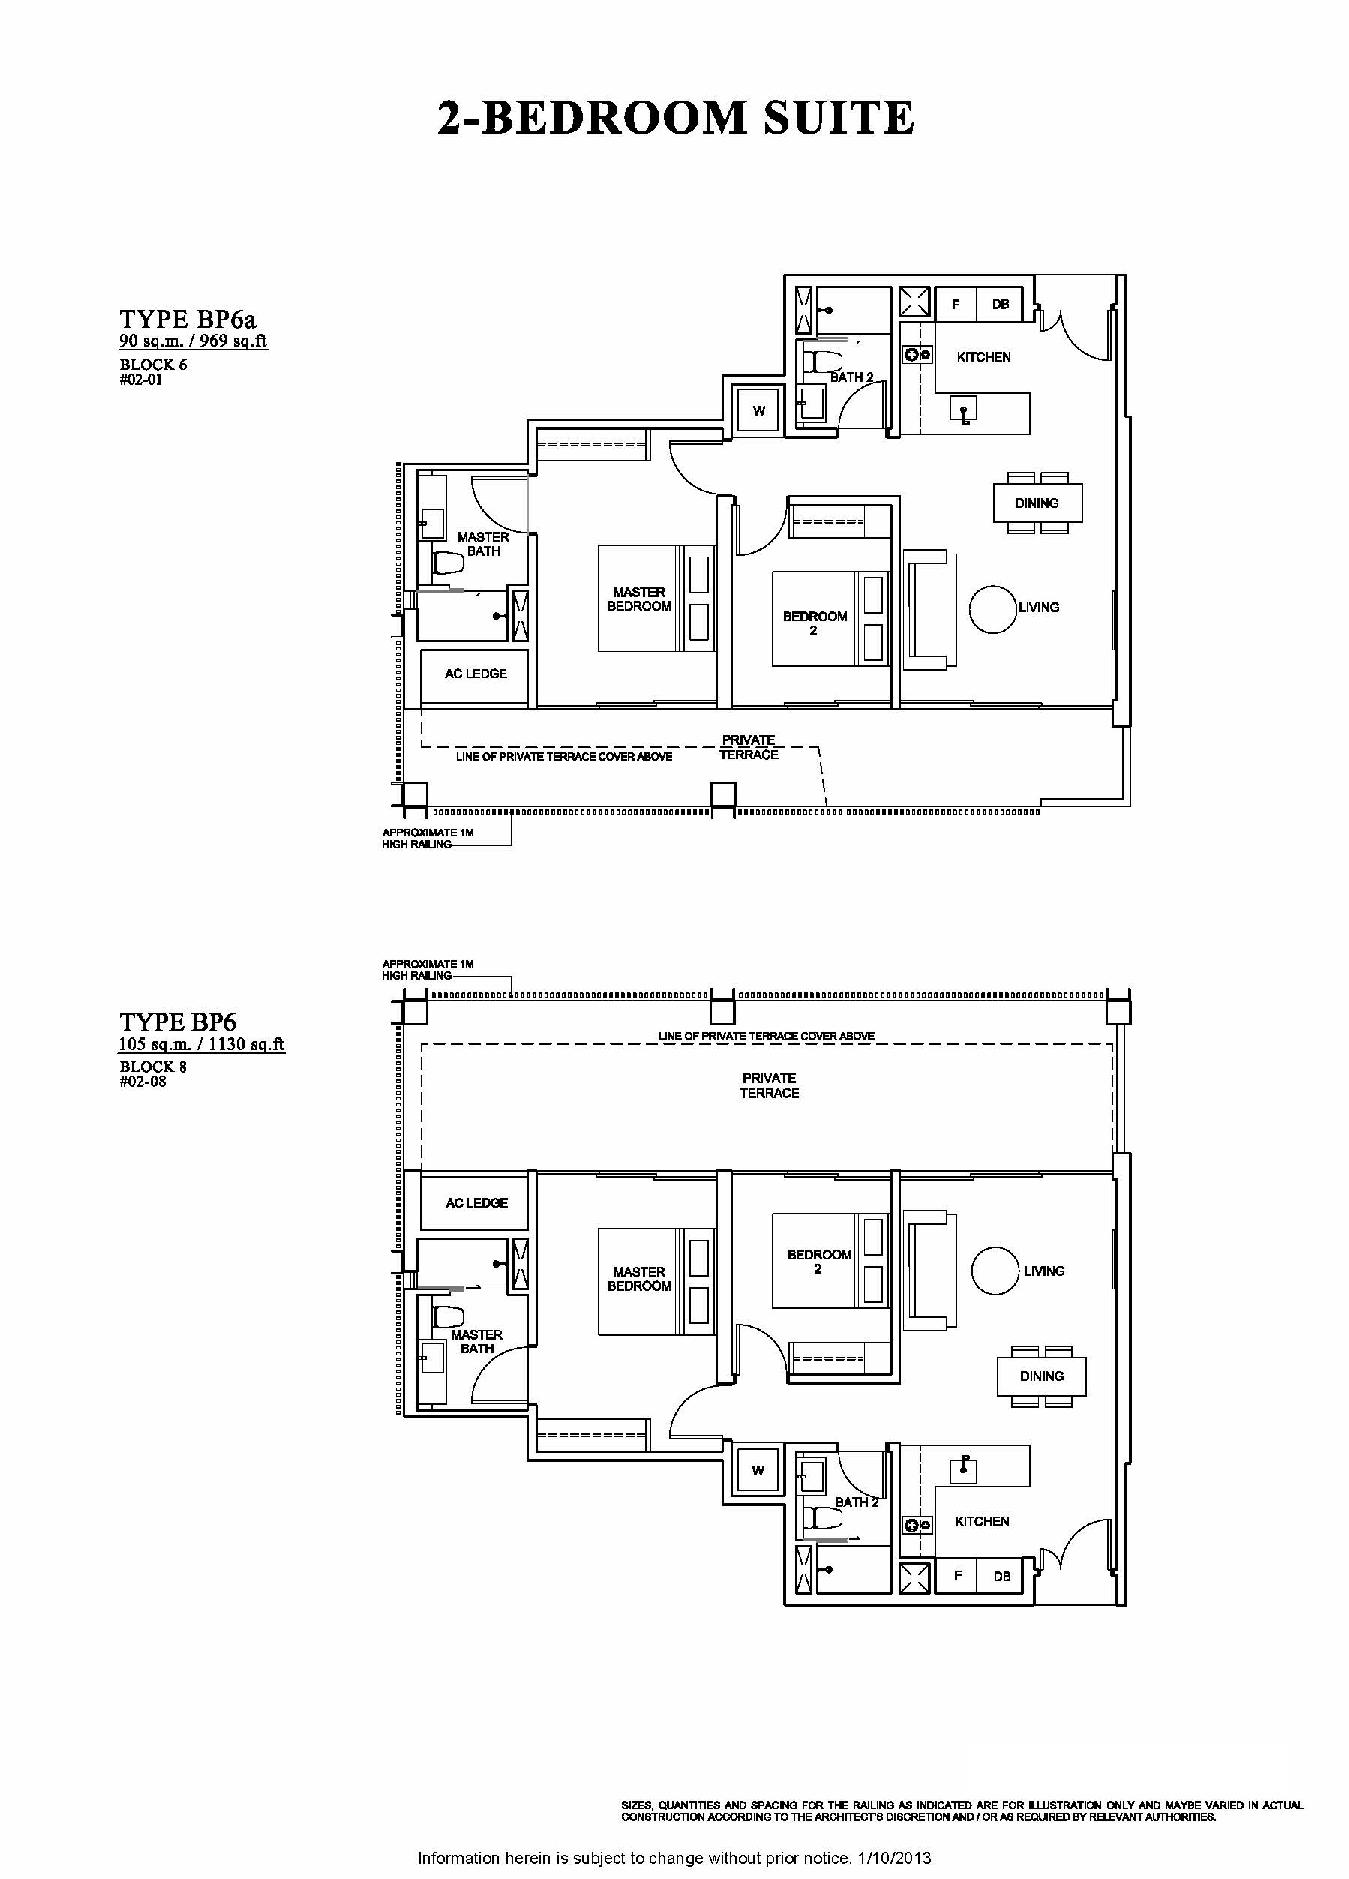 The Venue Residences 2 Bedroom Suite Floor Plan Type BP6a and BP6